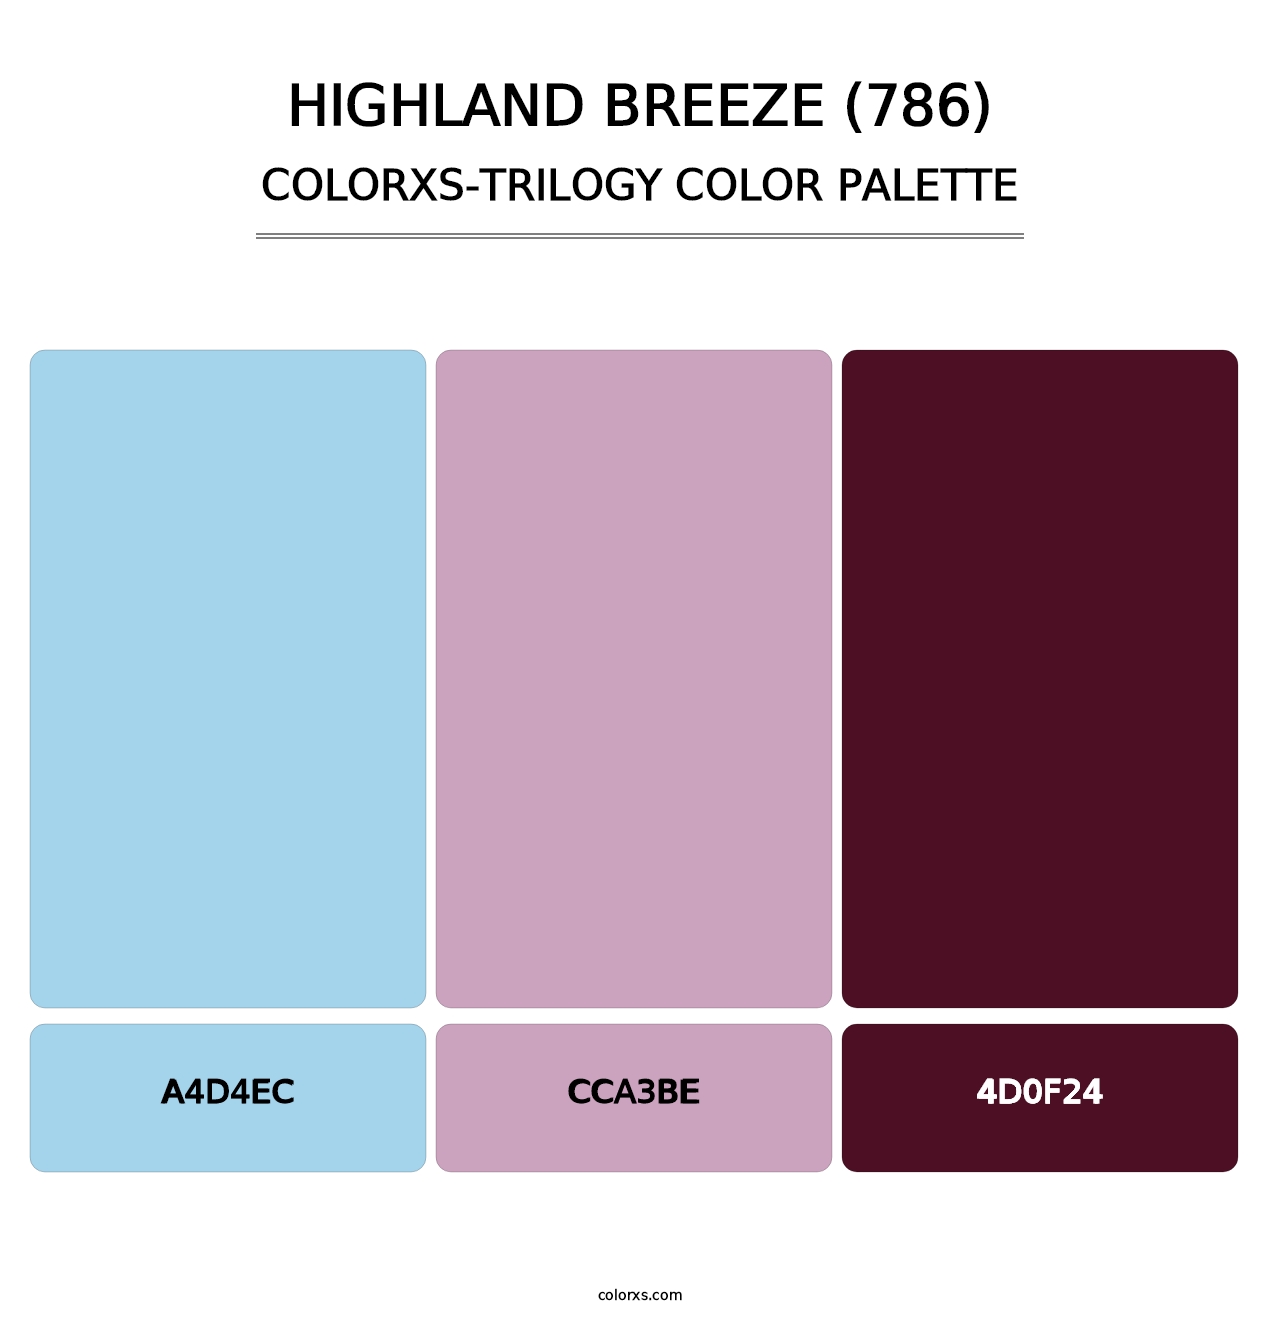 Highland Breeze (786) - Colorxs Trilogy Palette